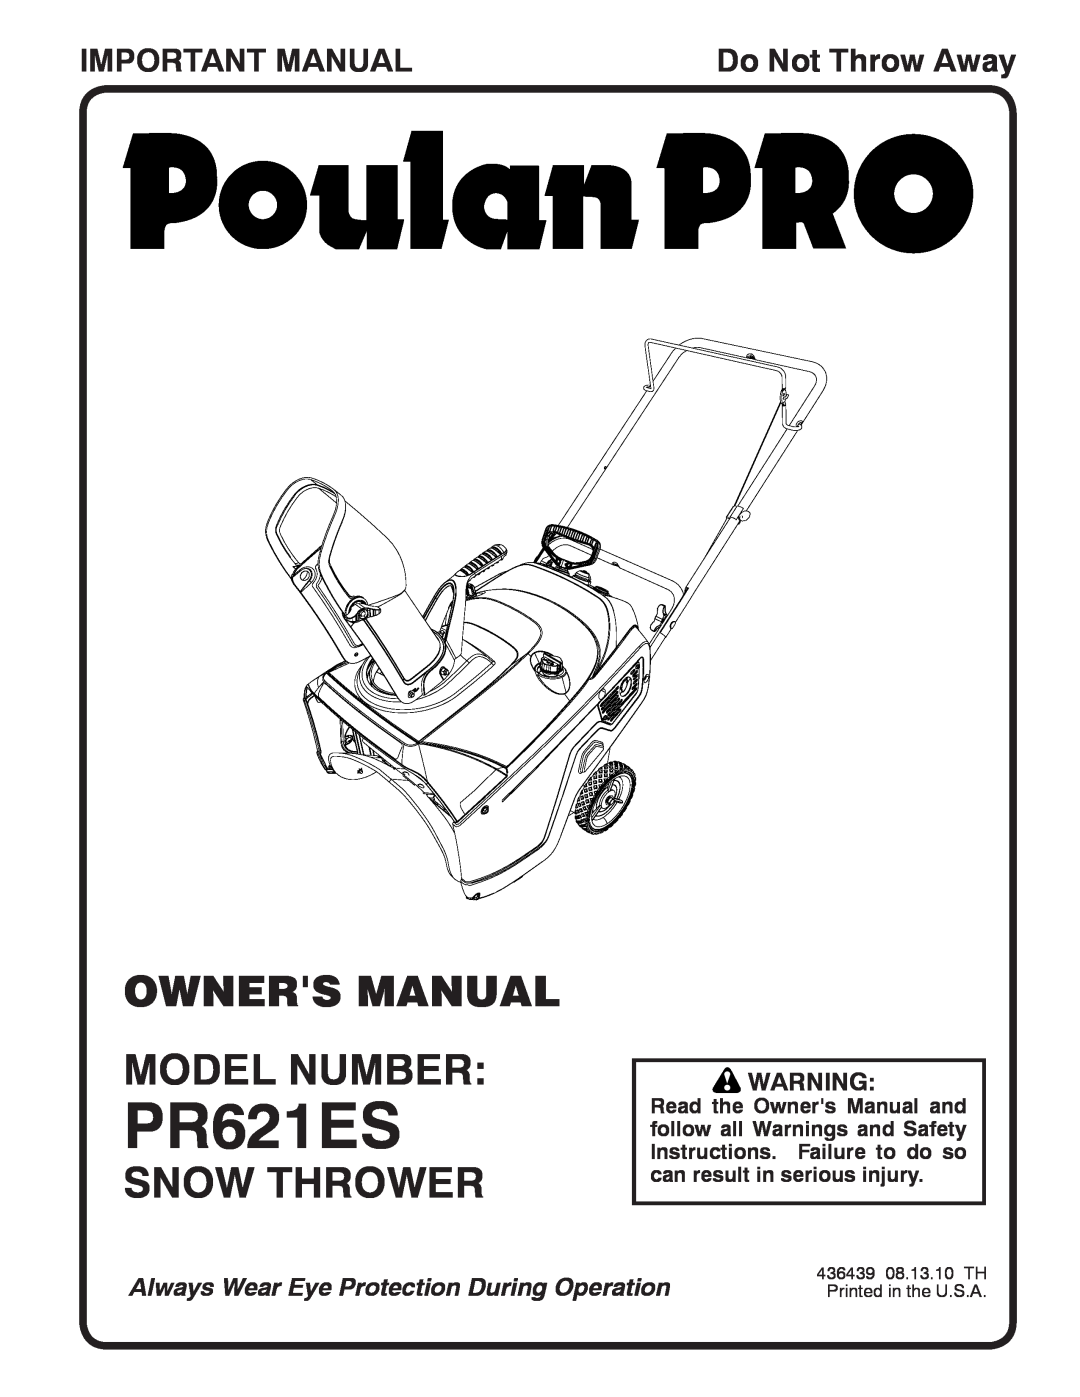 Poulan 96182000400, 436439 owner manual Snow Thrower, Important Manual, PR621ES, Do Not Throw Away 